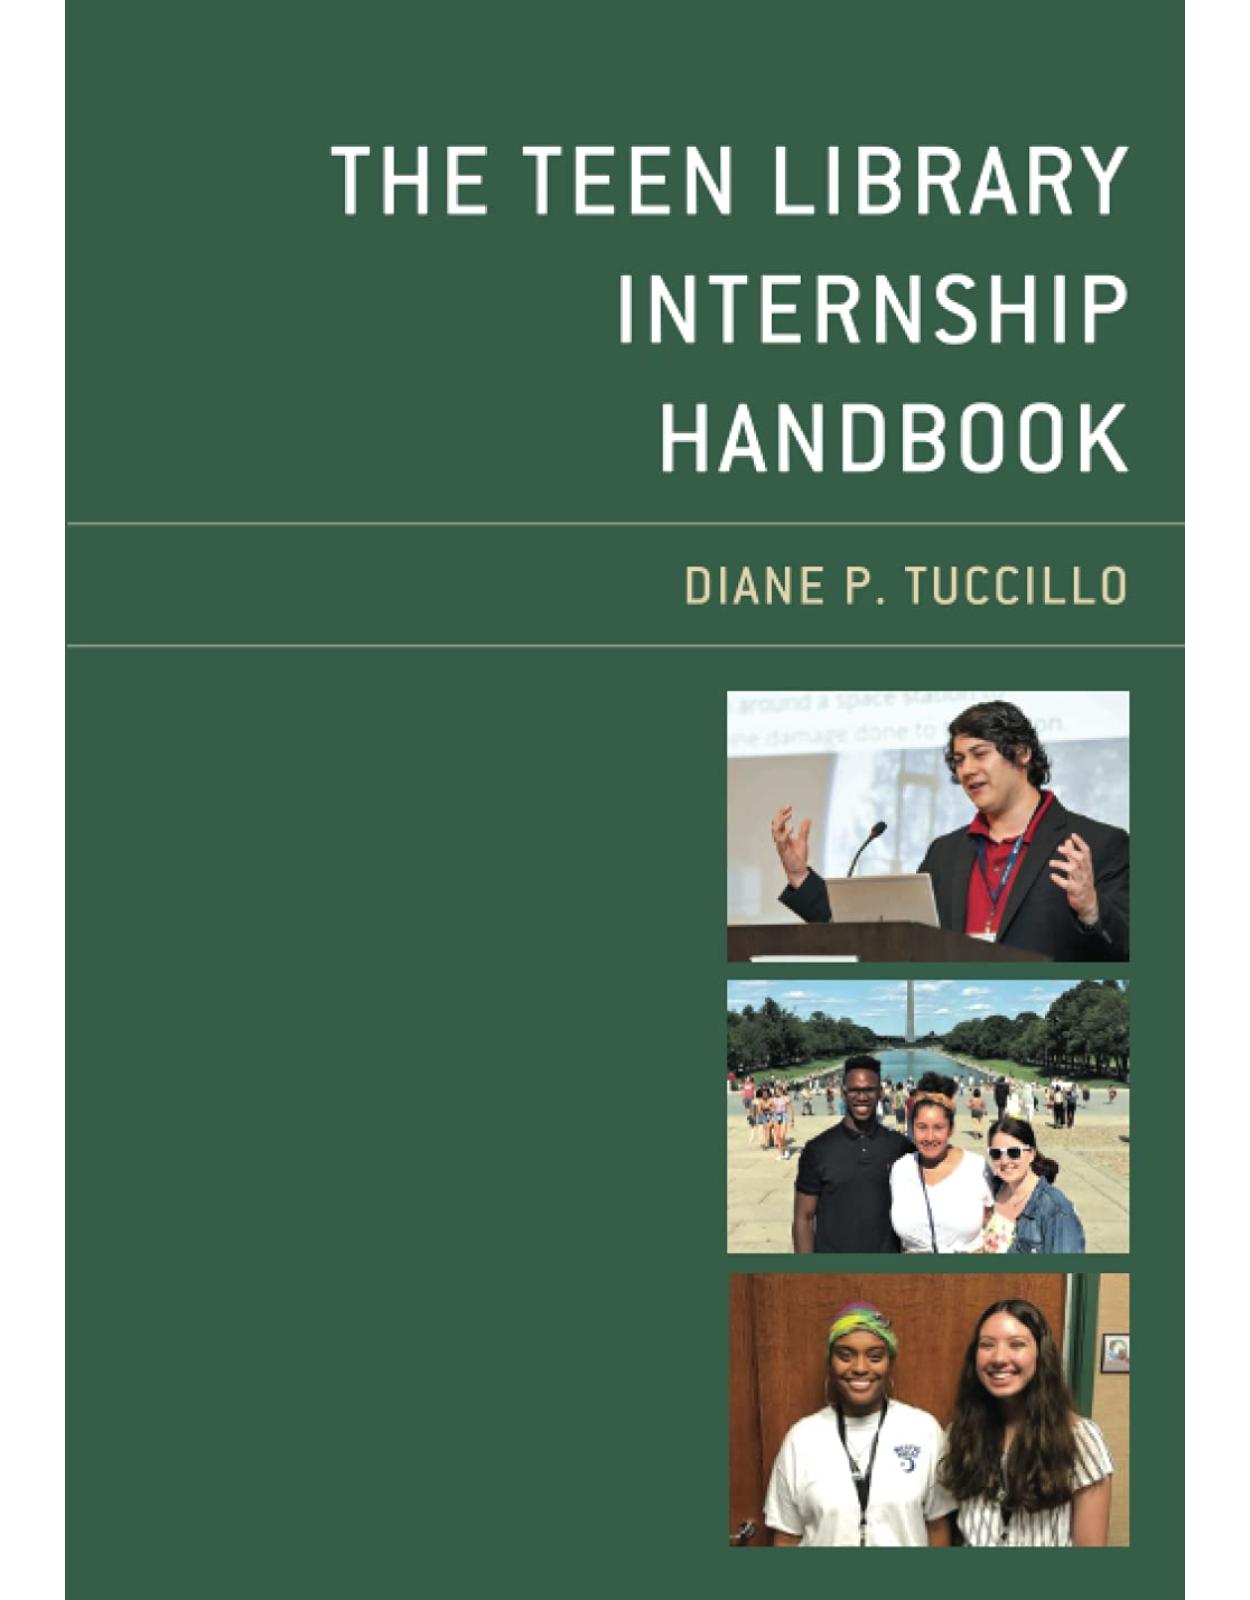 The Teen Library Internship Handbook